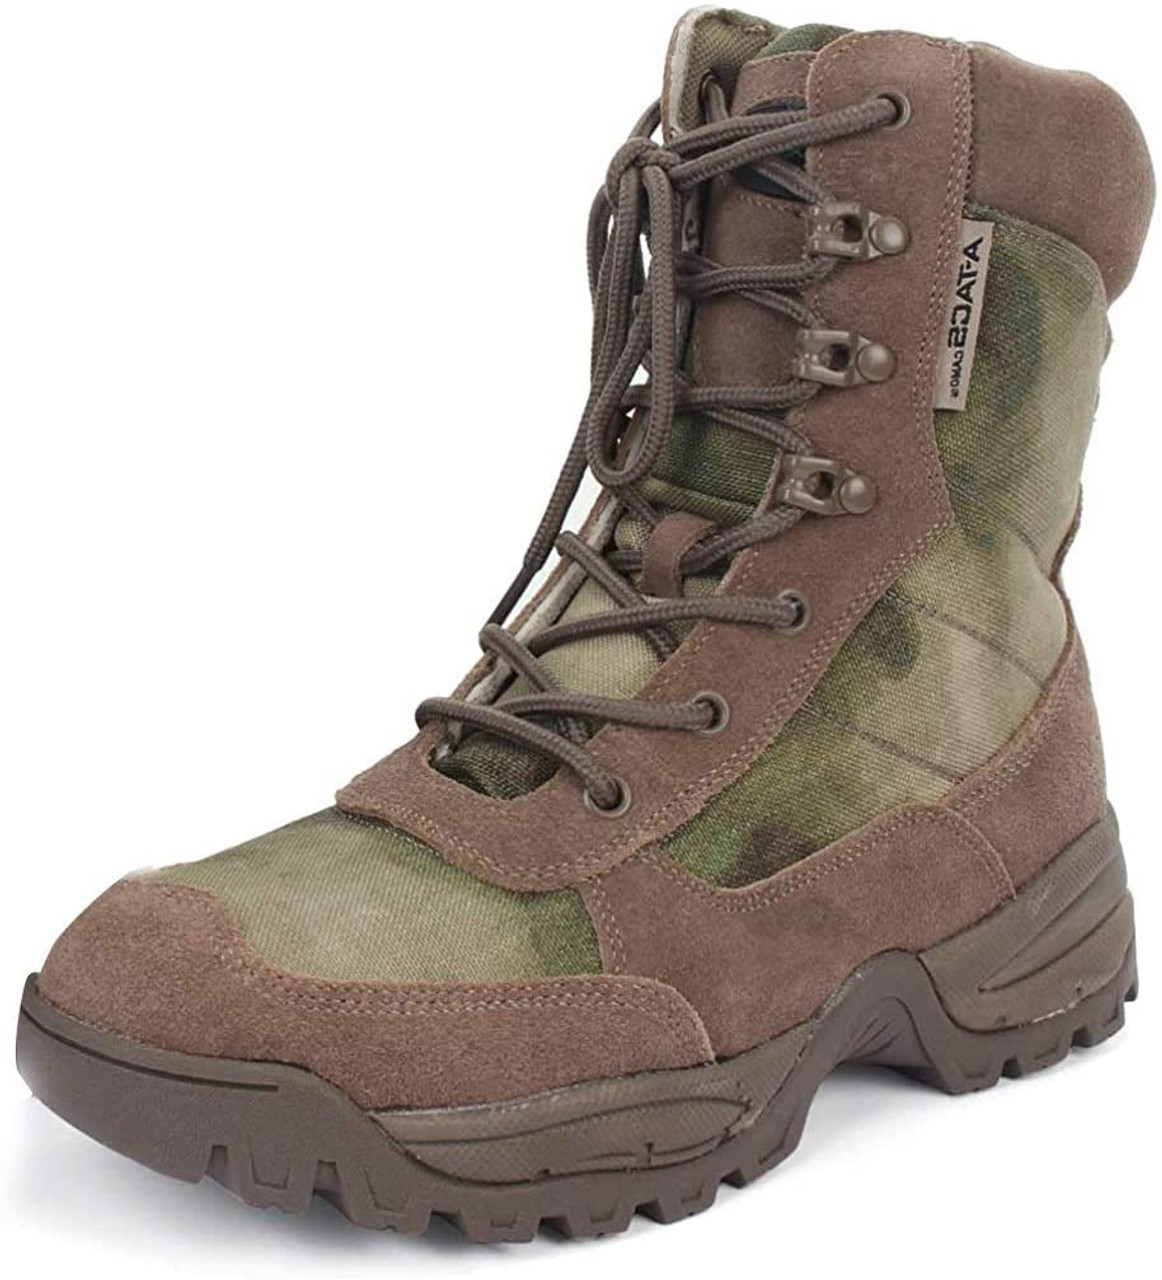 MIL-TEC Tactical boots with side zipper FG Camo US10/ 28cm